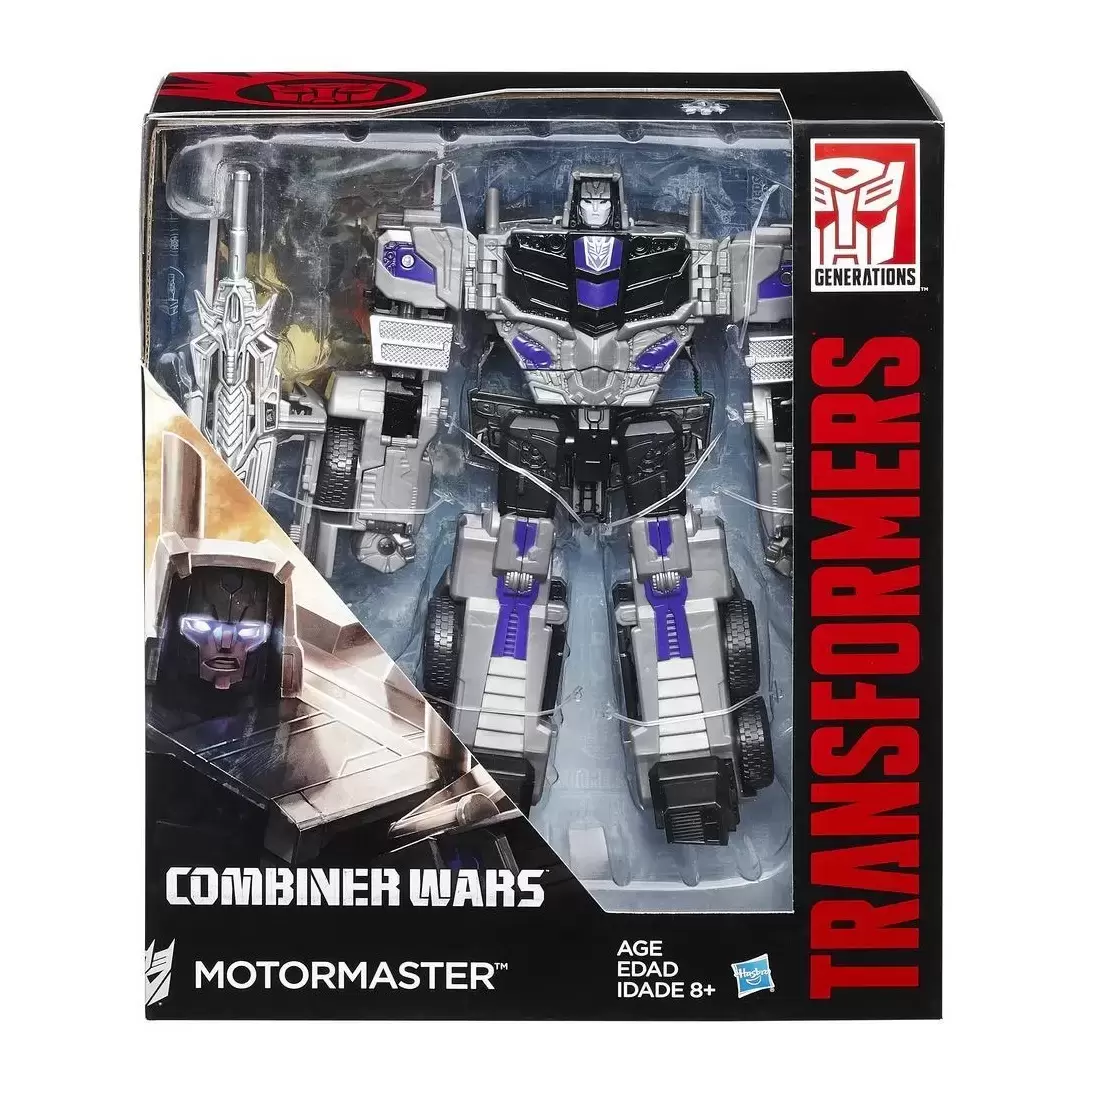 Transformers Prime Wars Trilogy: Combiner Wars - Motormaster